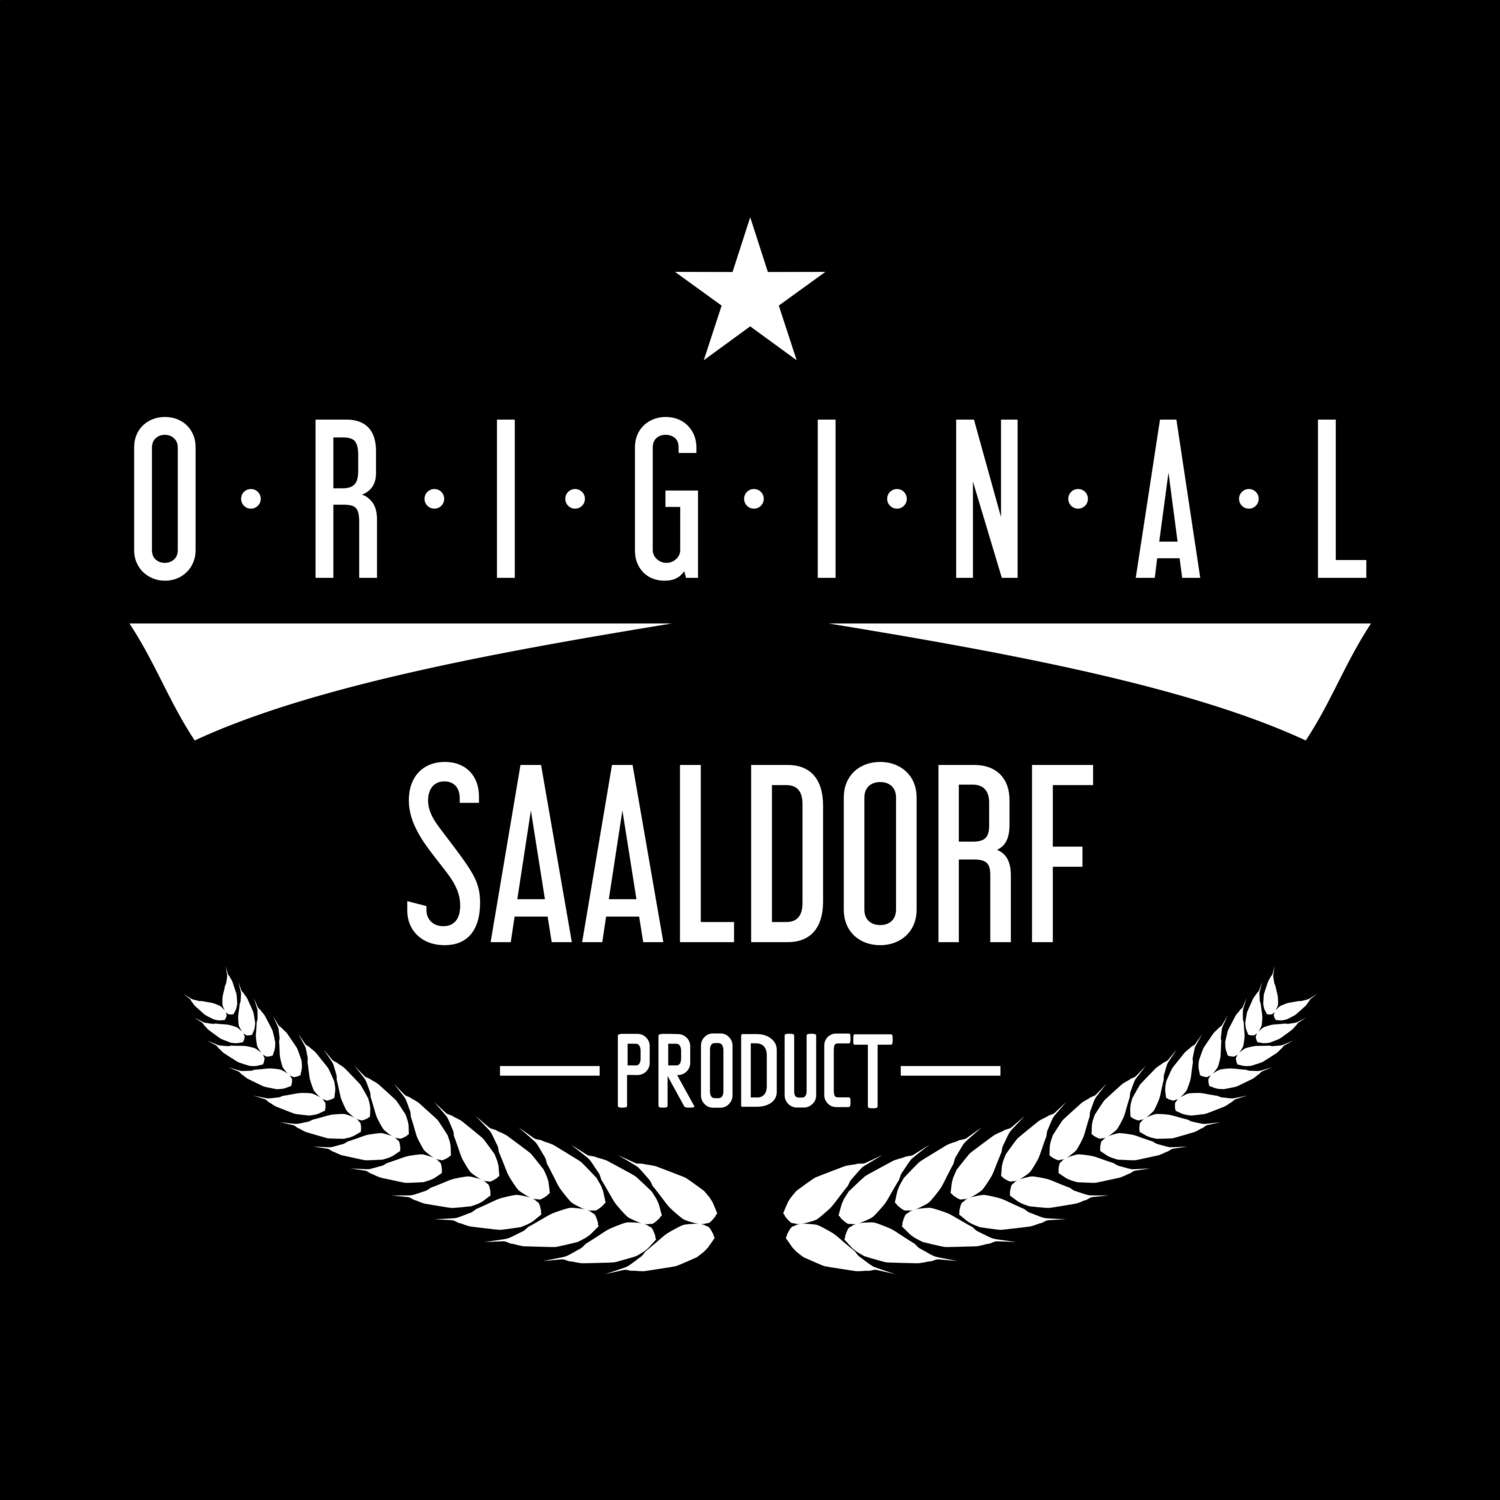 Saaldorf T-Shirt »Original Product«